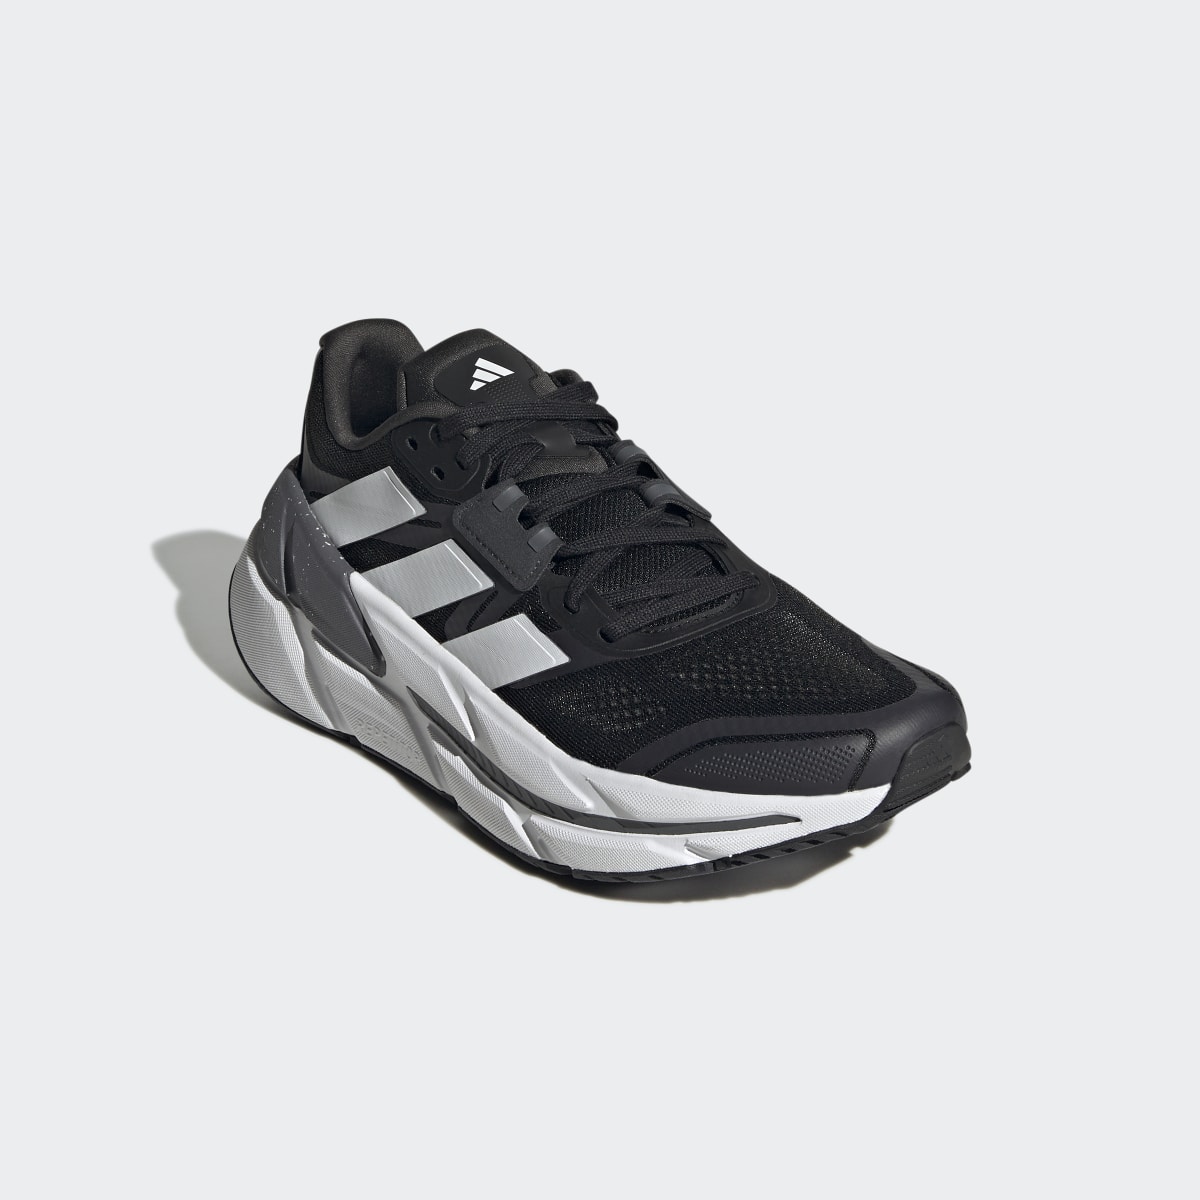 Adidas Adistar CS Running Shoes. 5